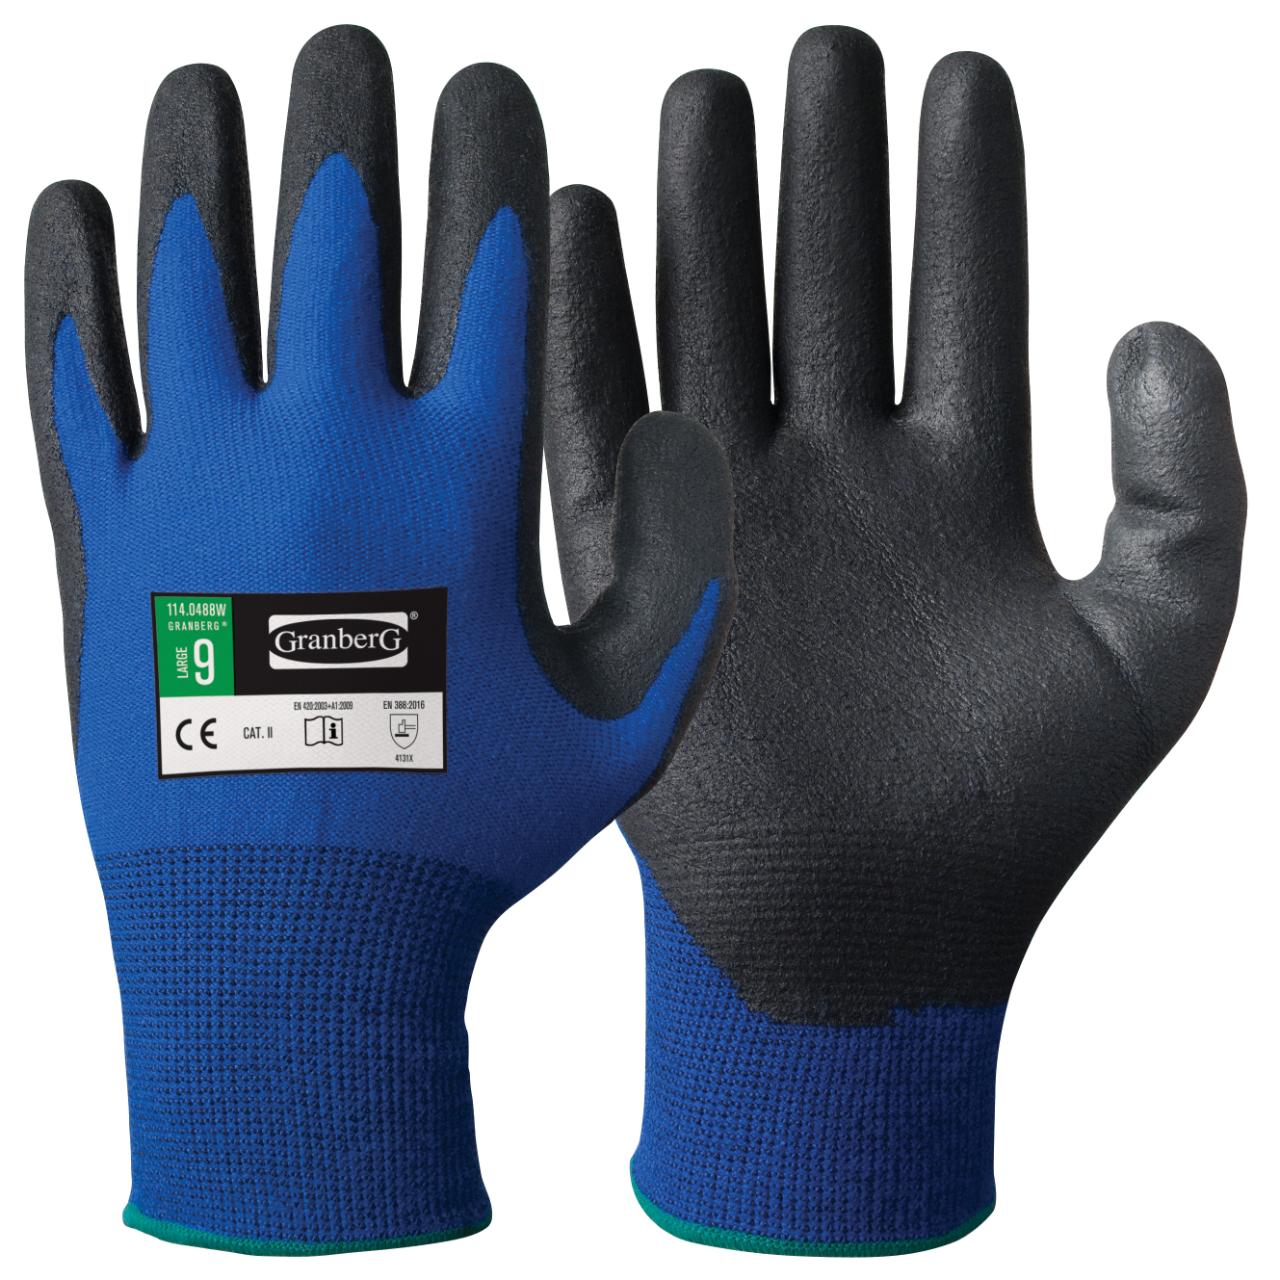 Assembly Winter Gloves